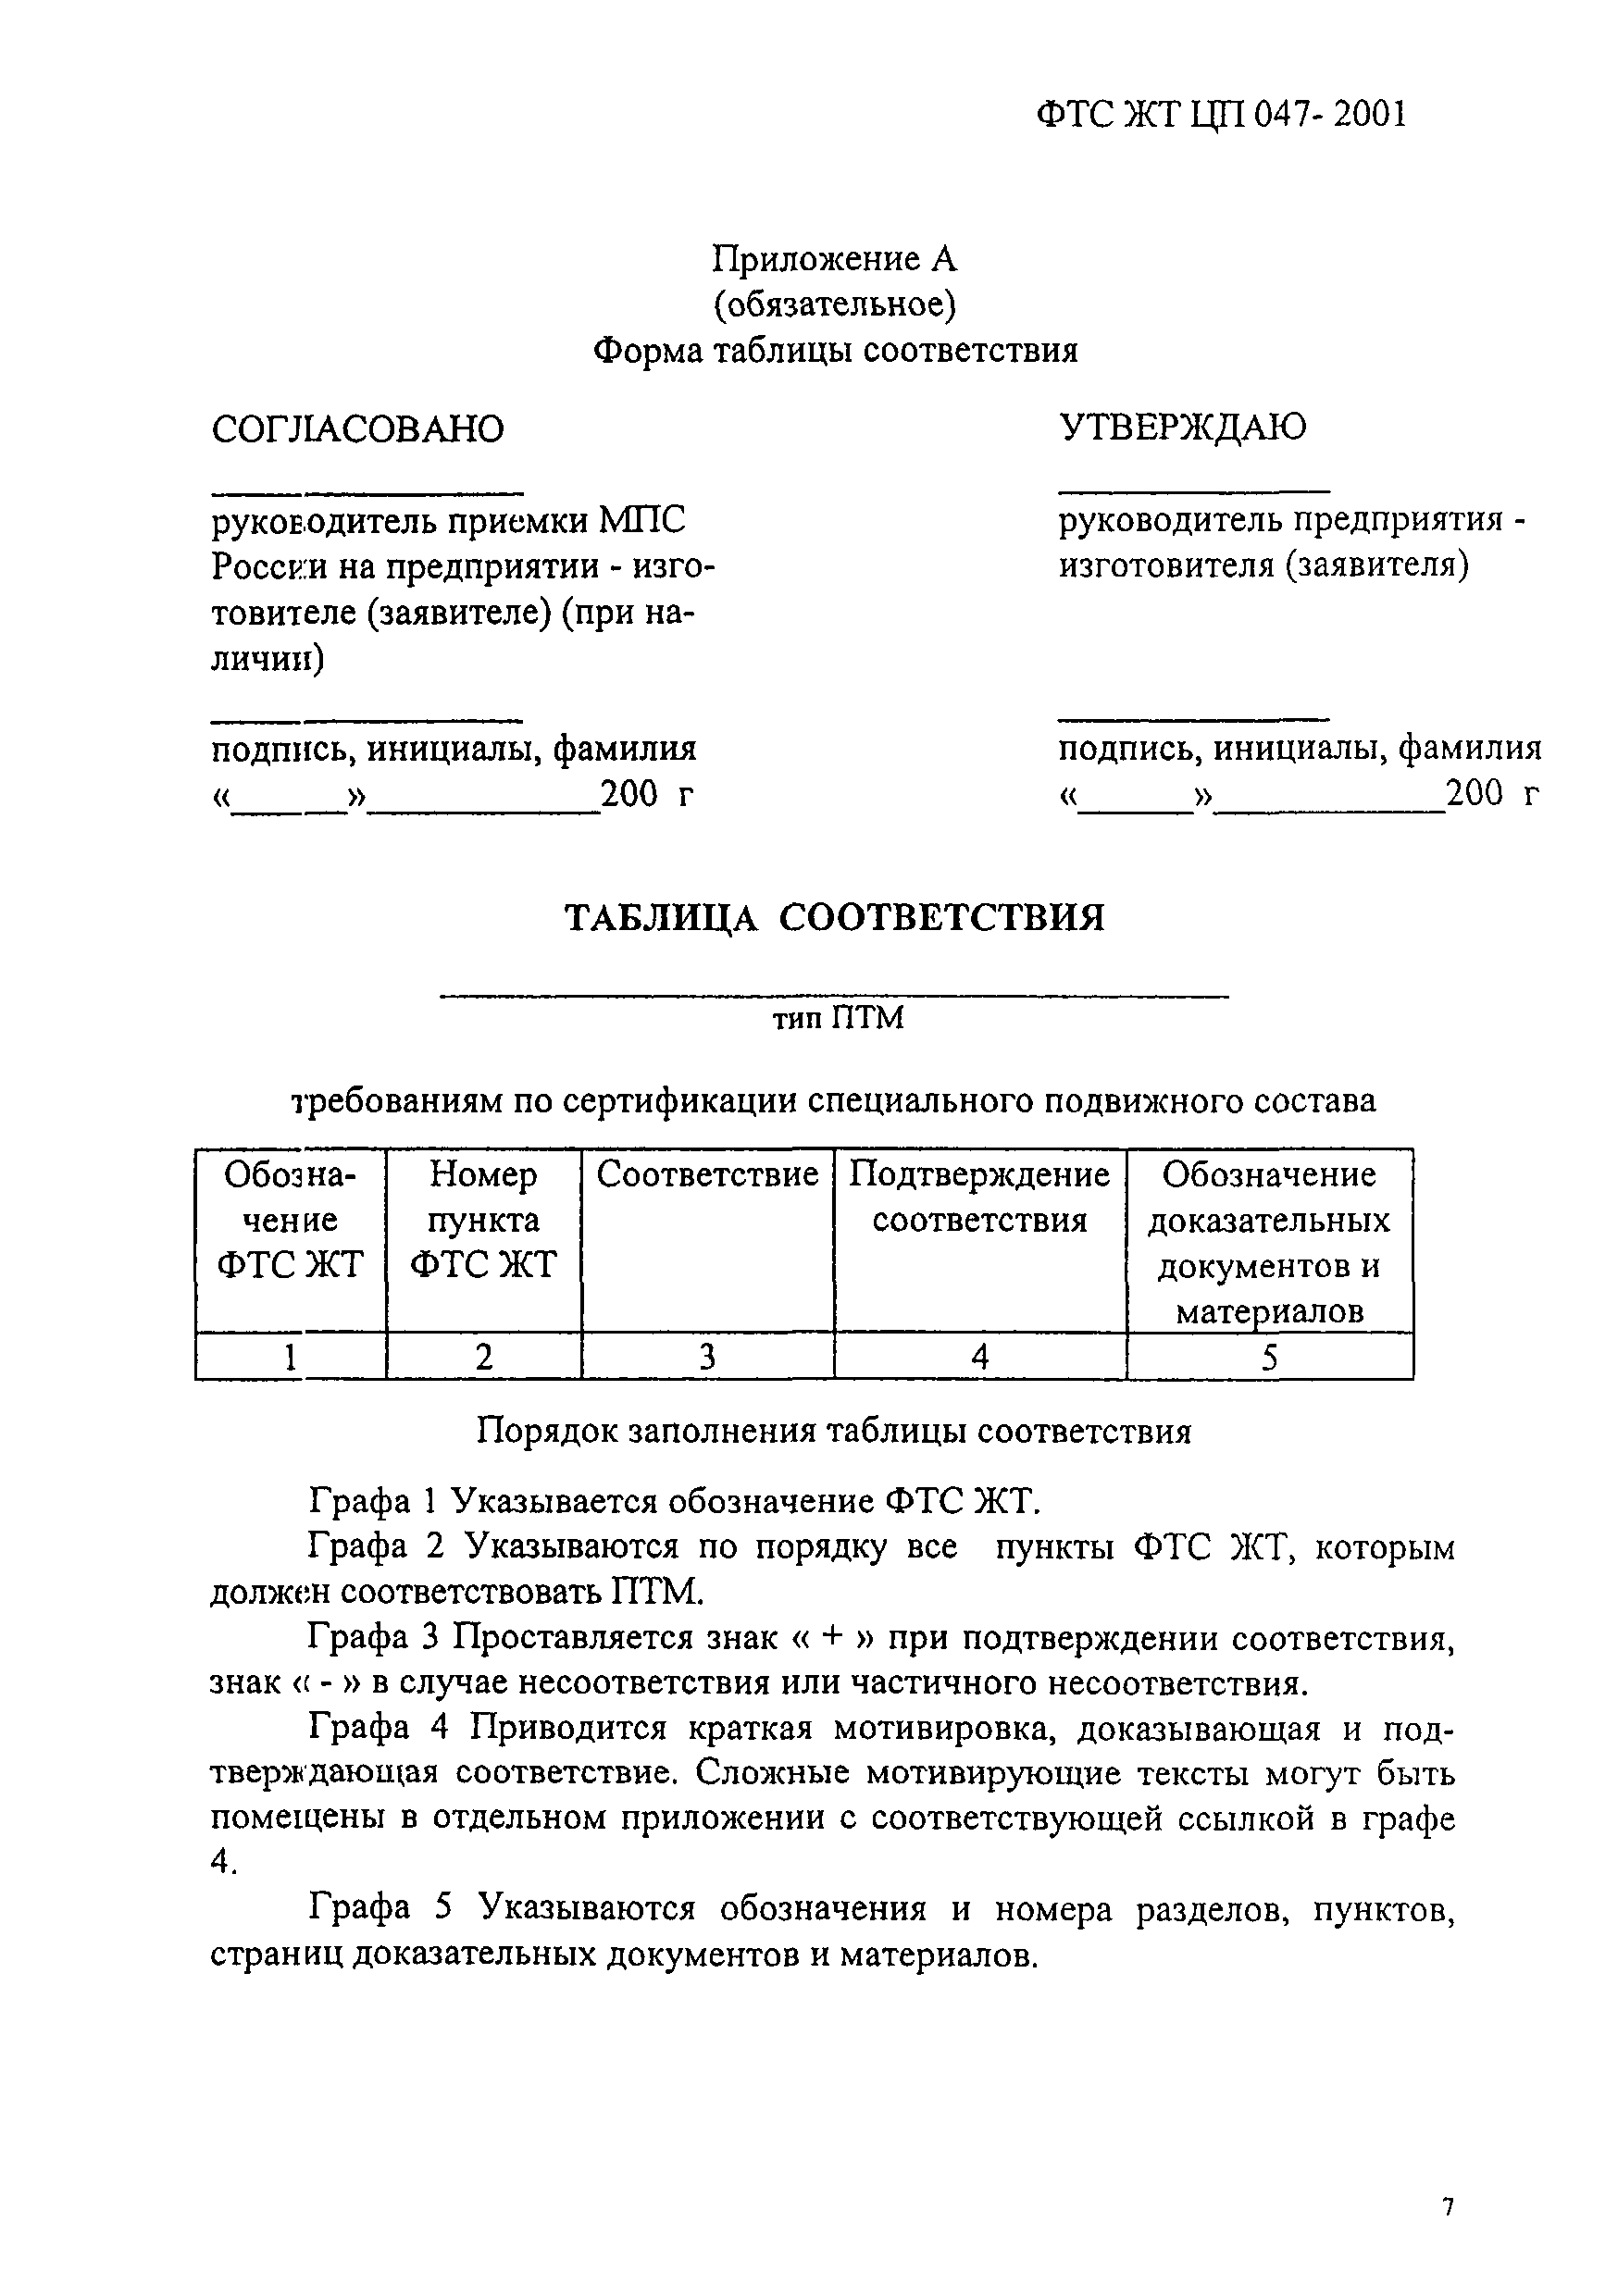 ФТС ЖТ ЦП 047-2001